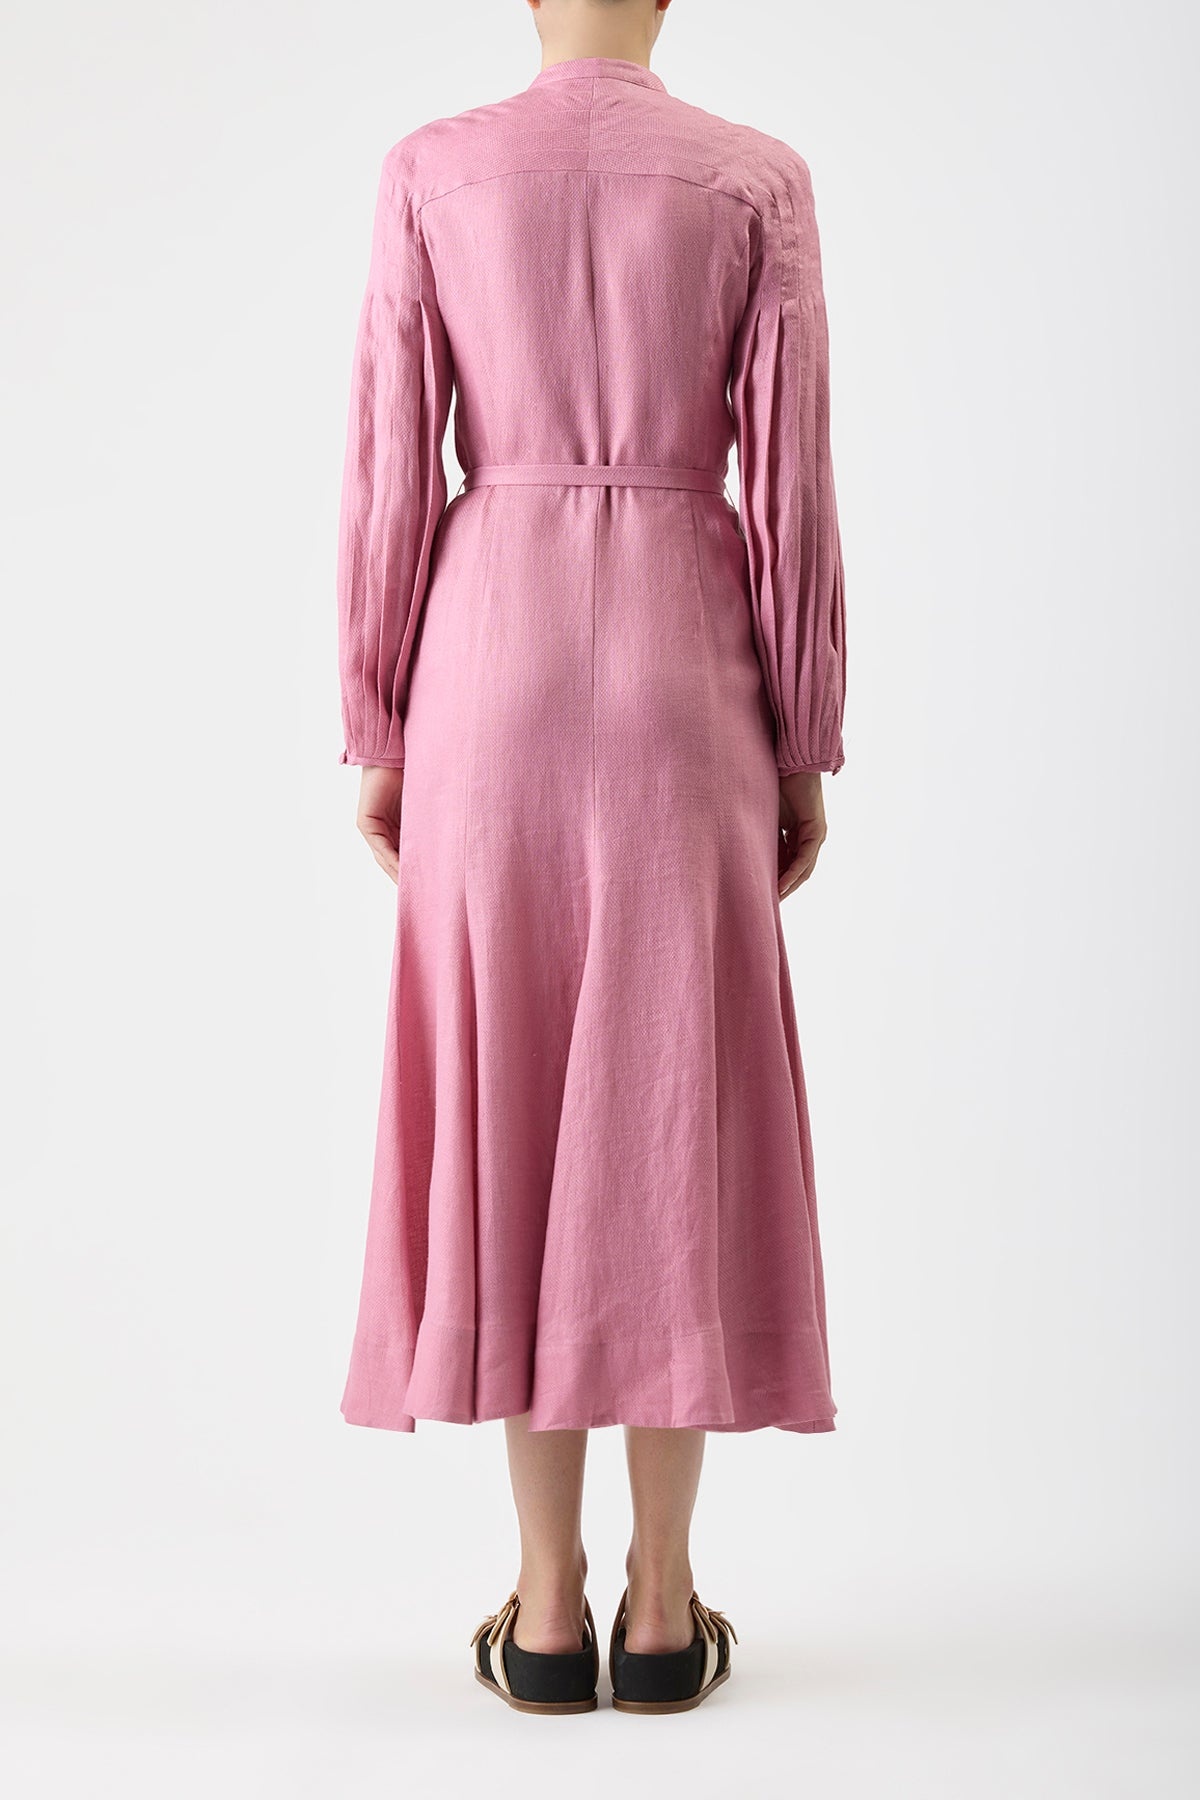 Lydia Dress with Slip in Rose Quartz Linen - 4